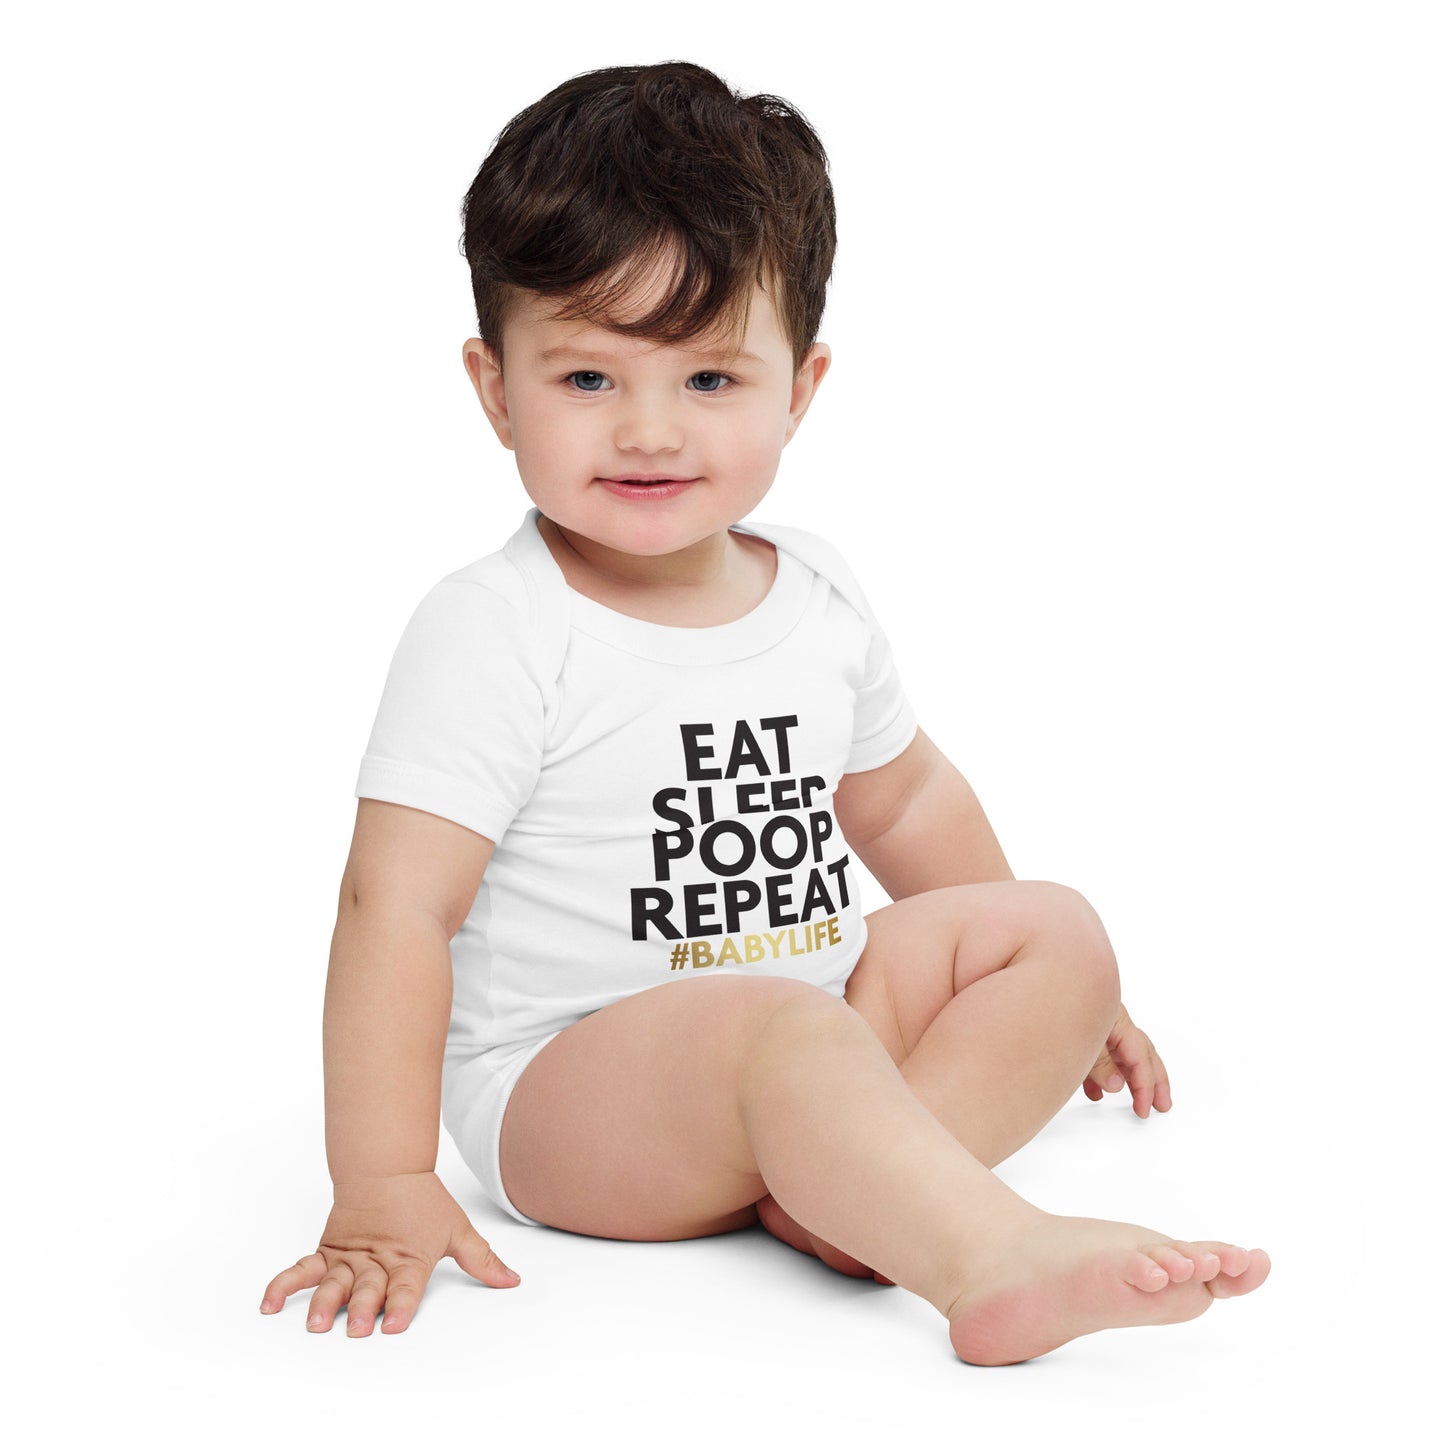 Baby short sleeve one piece - Eat Sleep Poop Repeat (Baby Life)